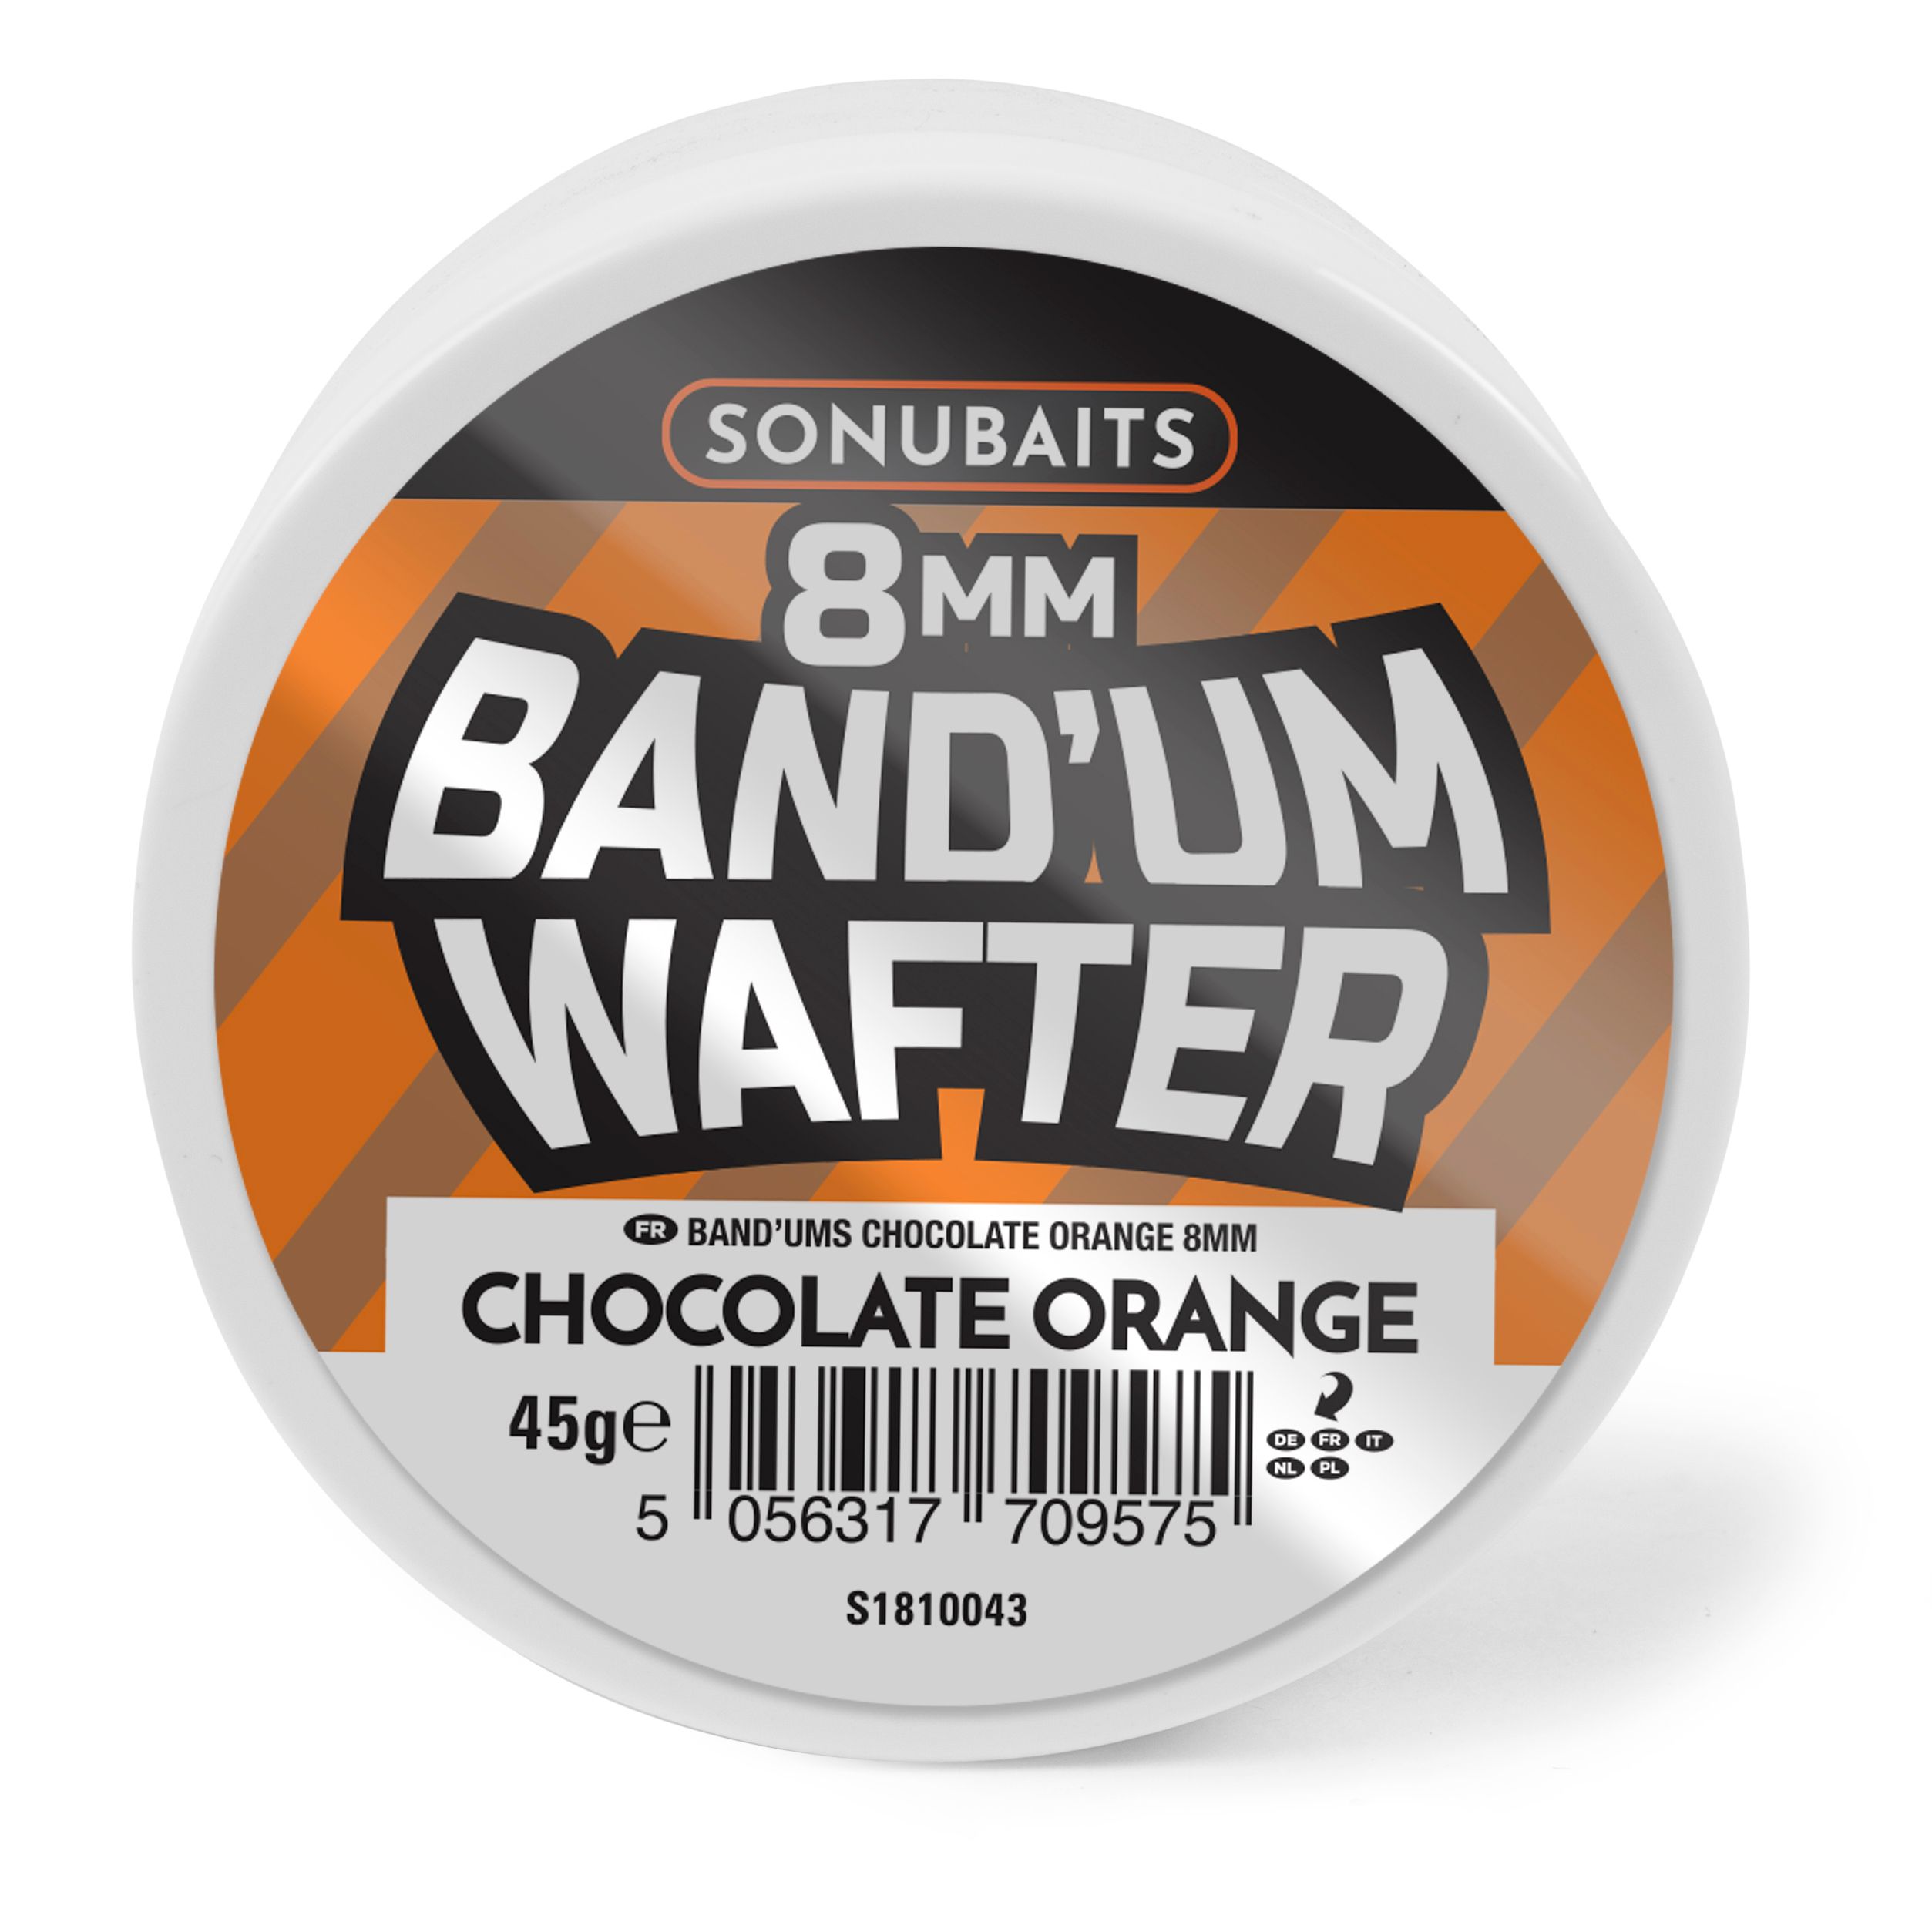 Sonubaits Band'um Wafters Chocolate Orange 8mm